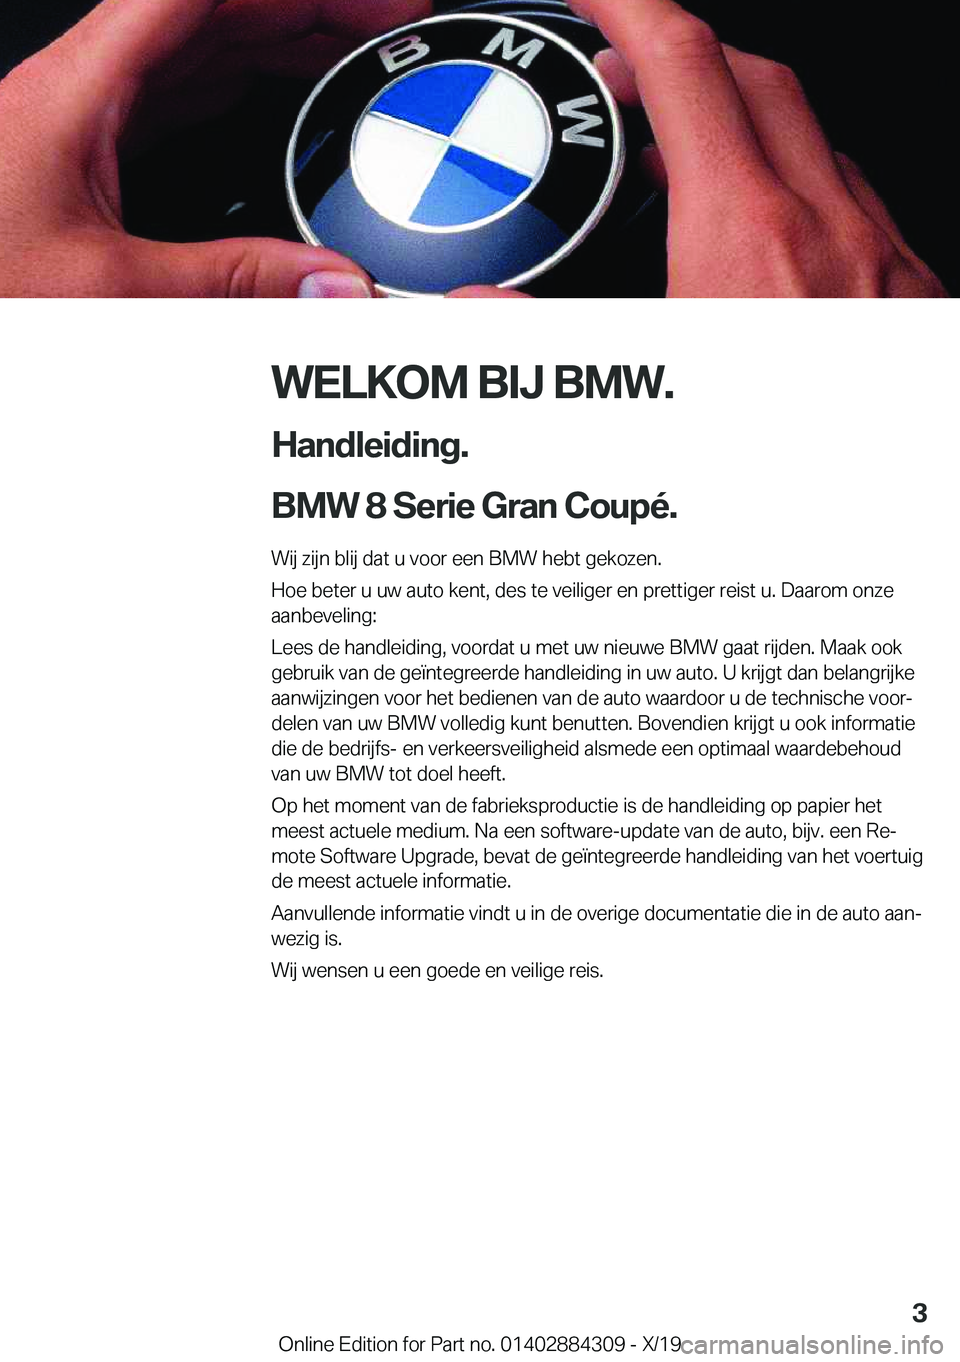 BMW 8 SERIES GRAN COUPE 2020  Instructieboekjes (in Dutch) �W�E�L�K�O�M��B�I�J��B�M�W�.
�H�a�n�d�l�e�i�d�i�n�g�.
�B�M�W��8��S�e�r�i�e��G�r�a�n��C�o�u�p�